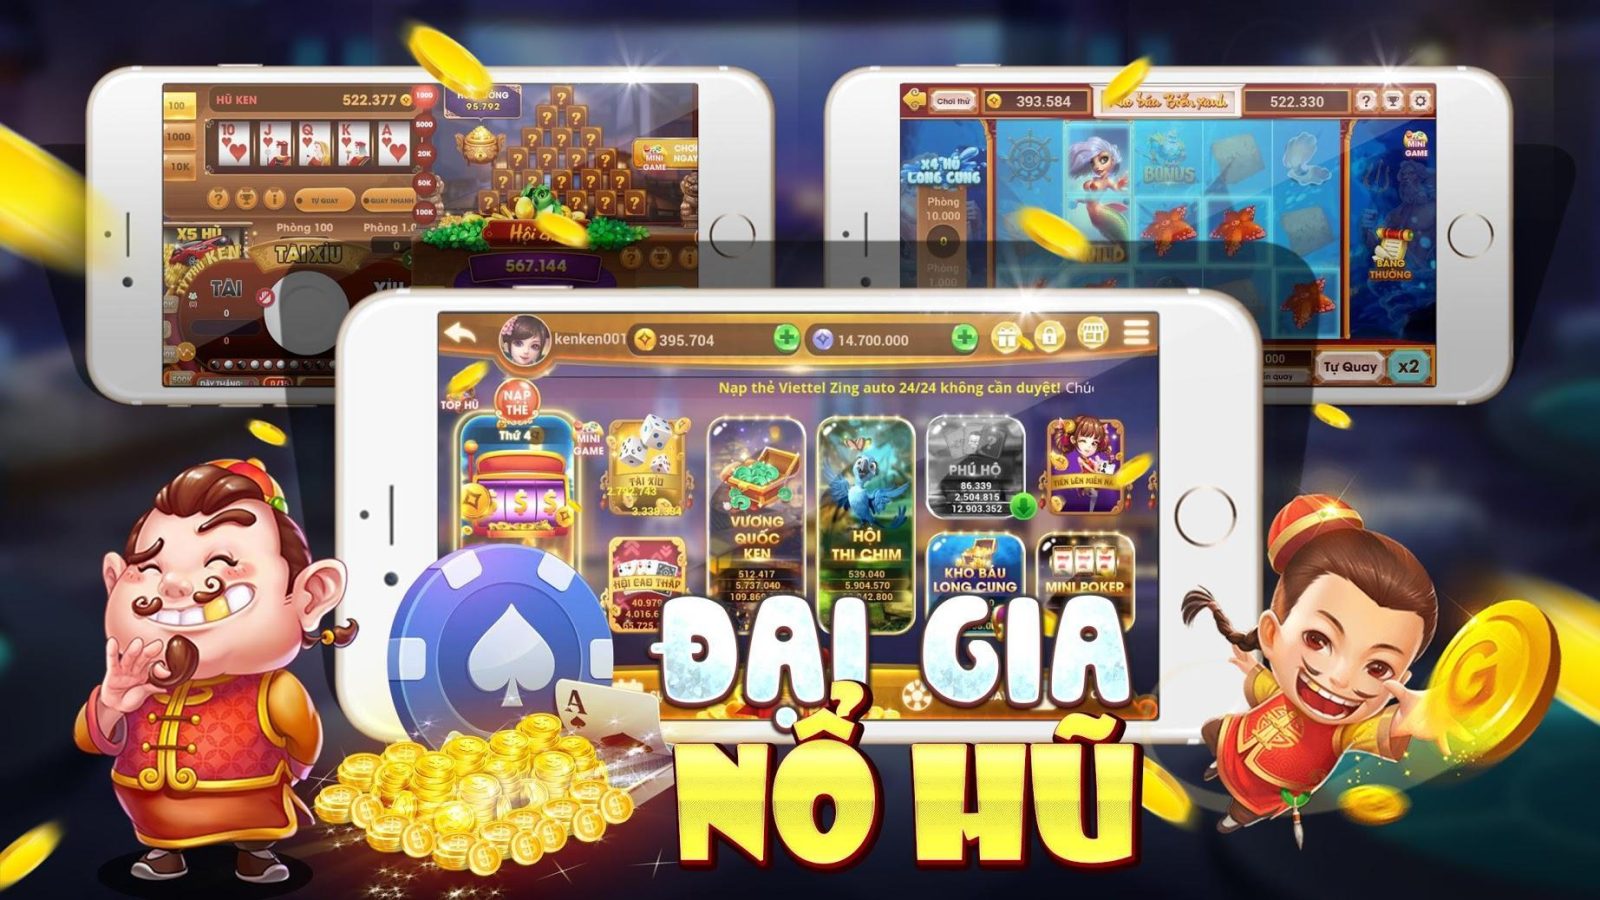 game-danh-bai-doi-thuong-monclub-online-game-bai-win-123-online-2